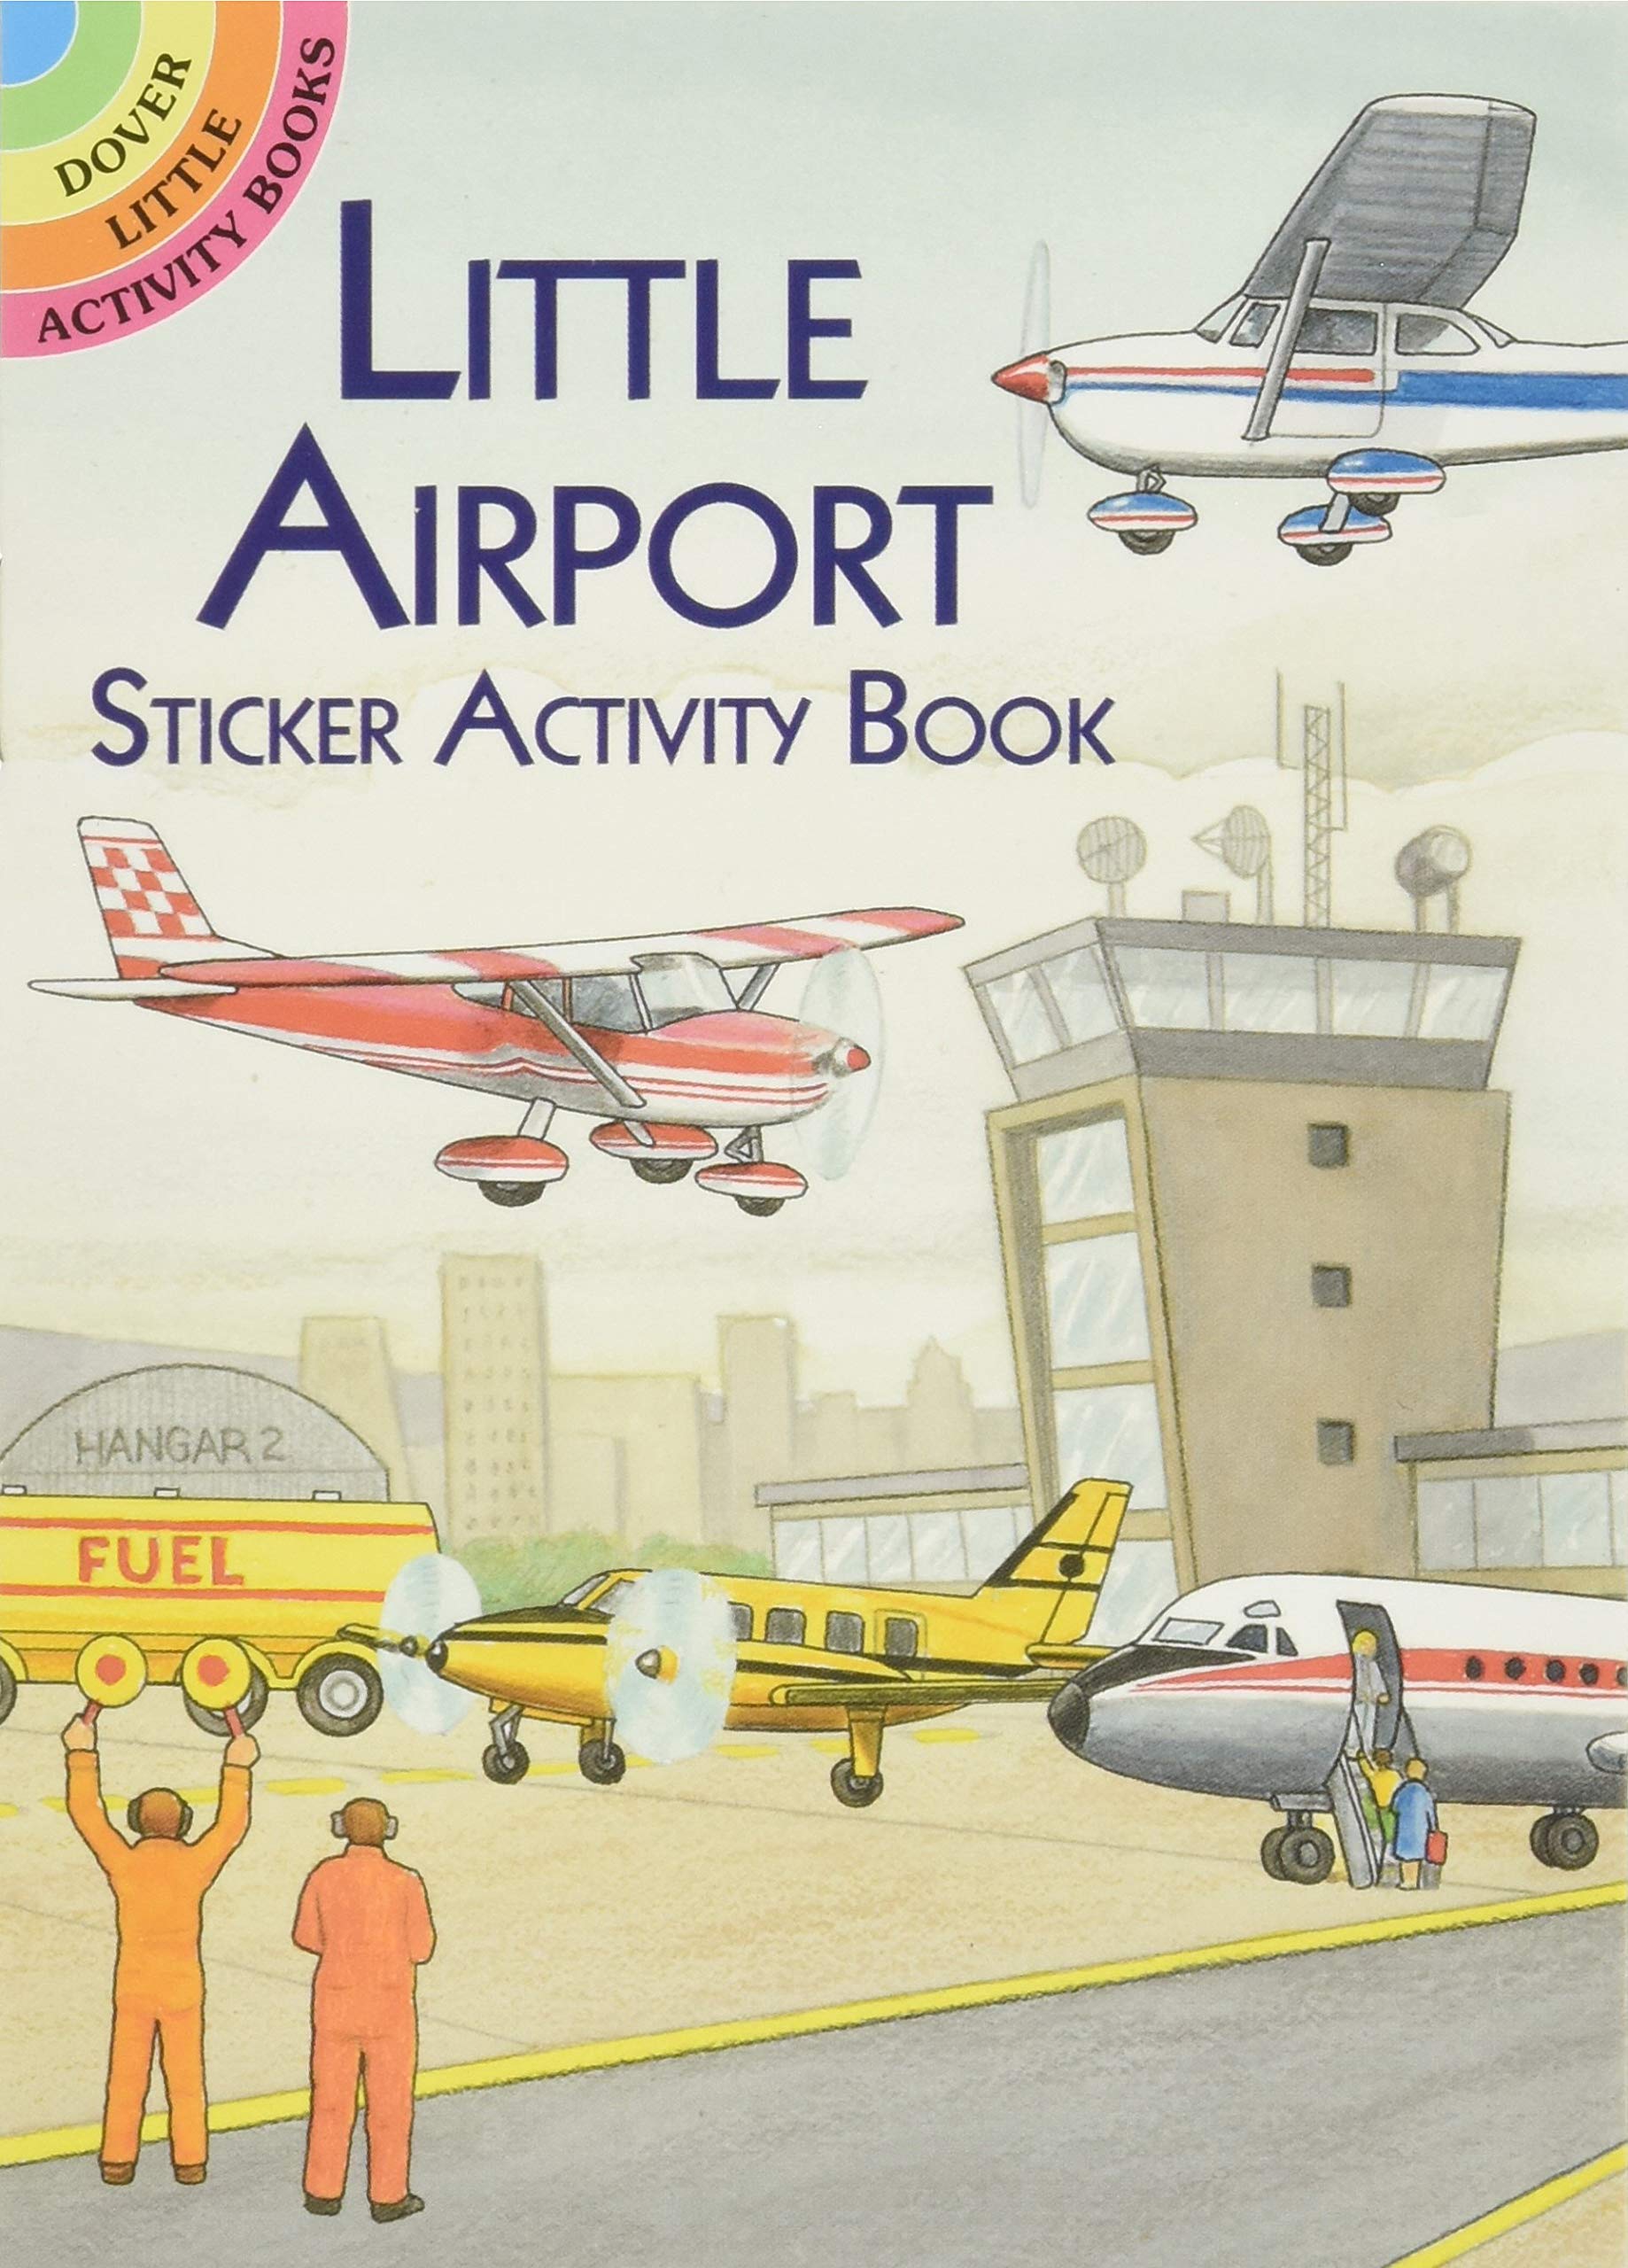 Little Airport Sticker Activity Book (Dover Little Activity Books Stickers)